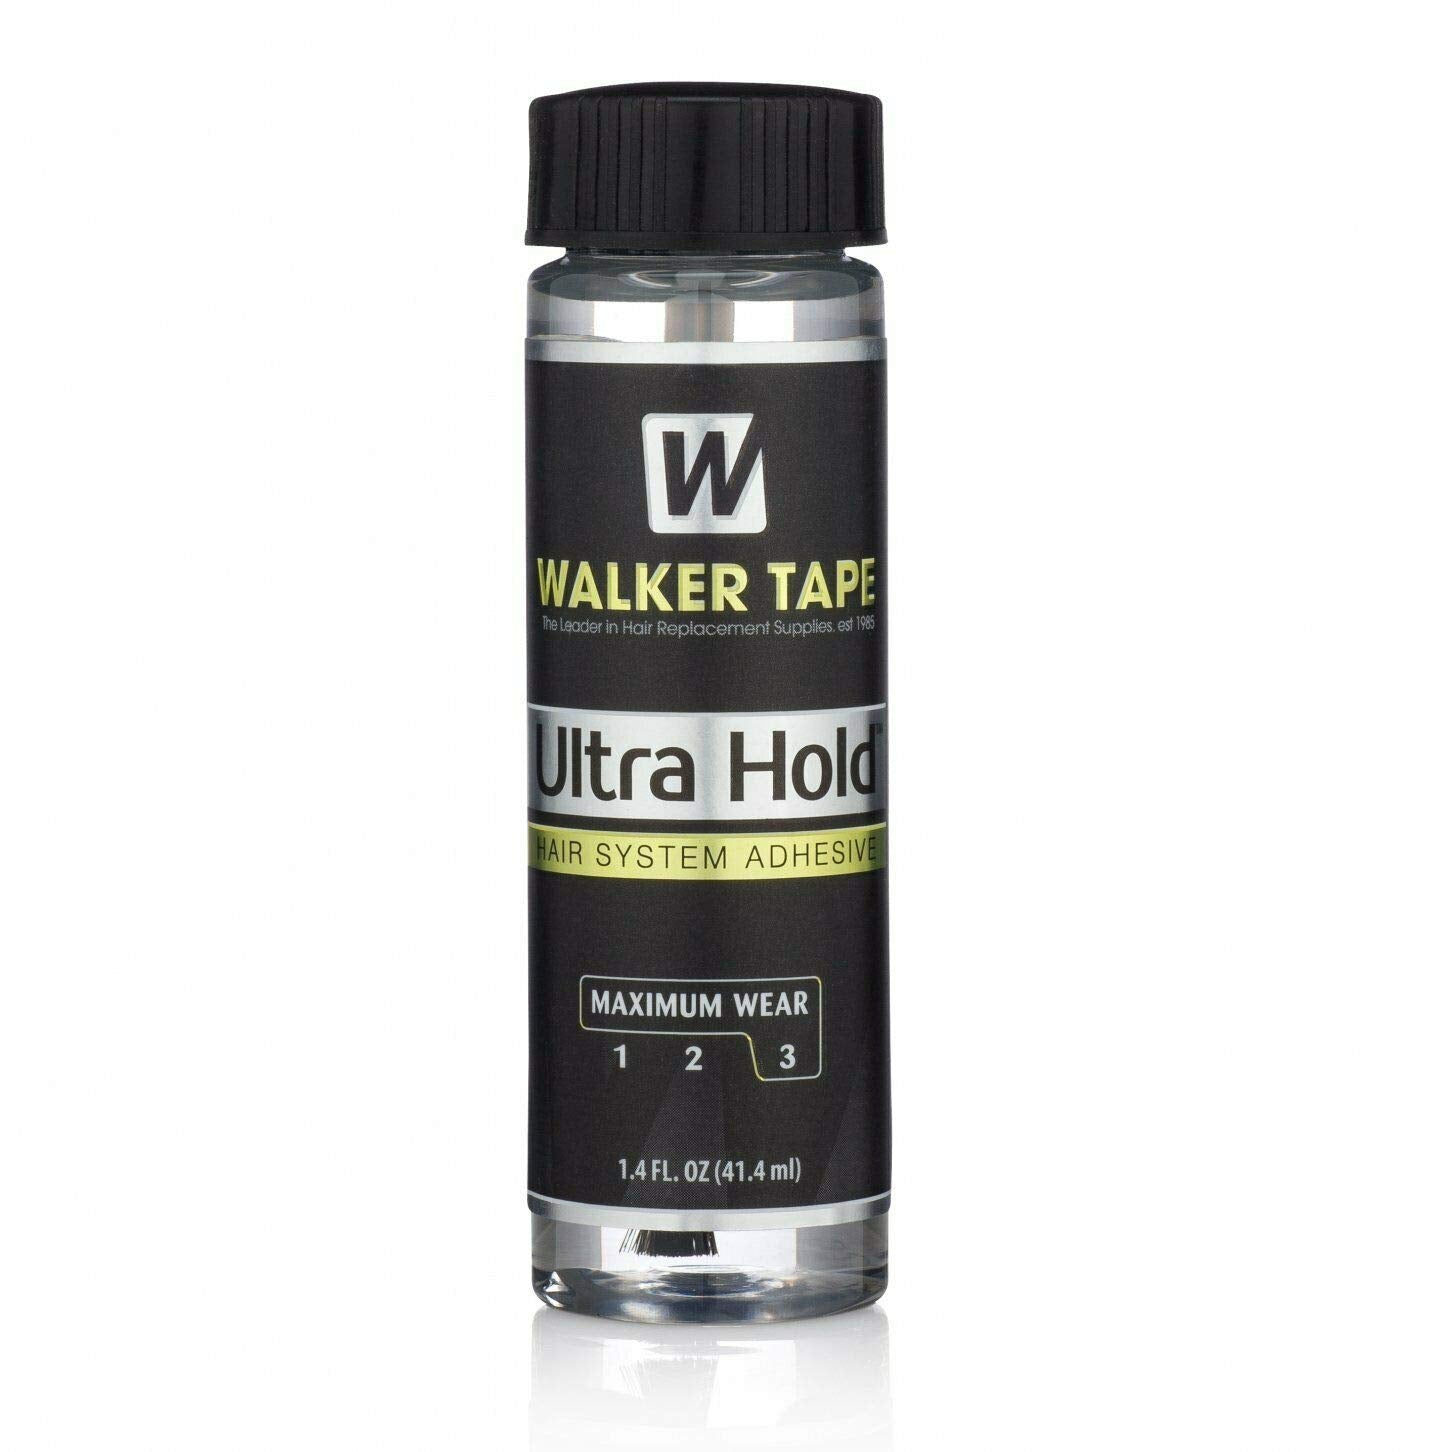 Pegamento Walker Tape ULTRA HOLD Mediano 1.4 FL.OZ (41.4 ml)